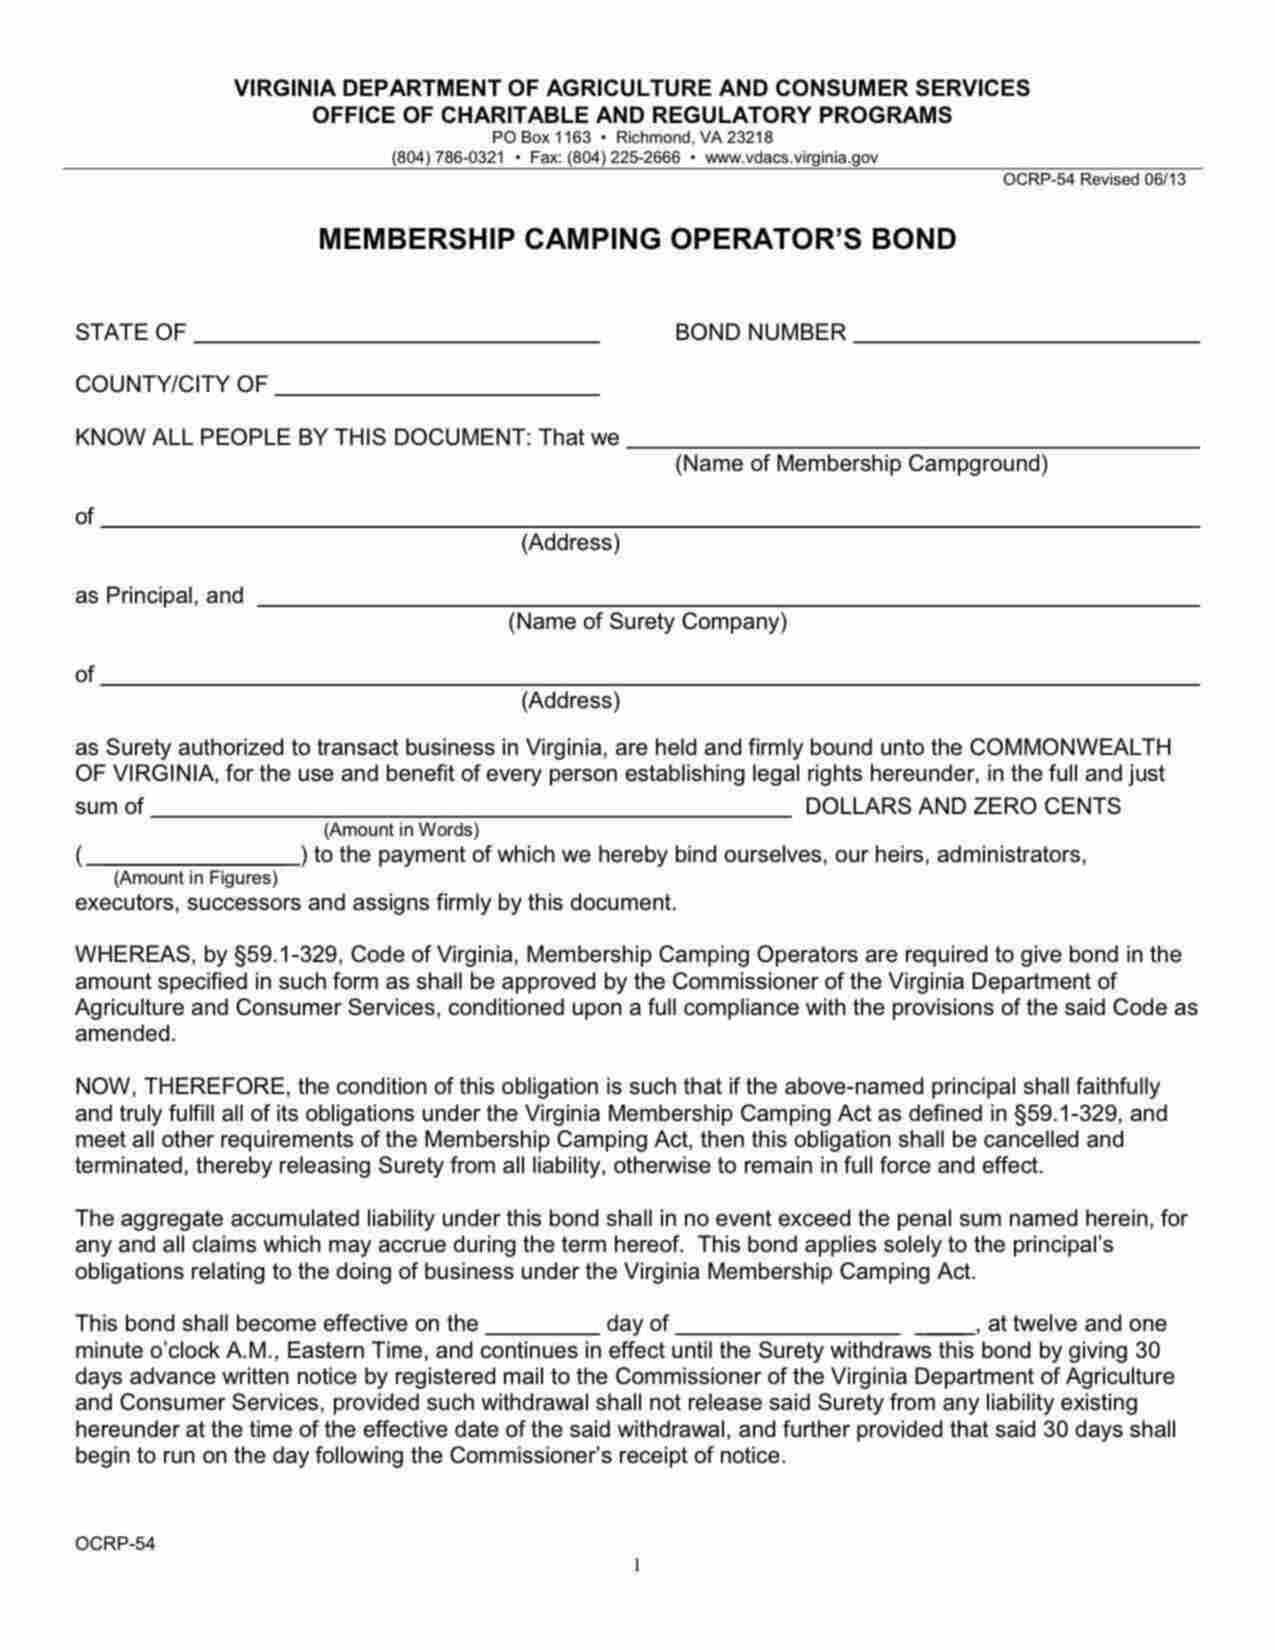 Virginia Membership Camping Operator Bond Form